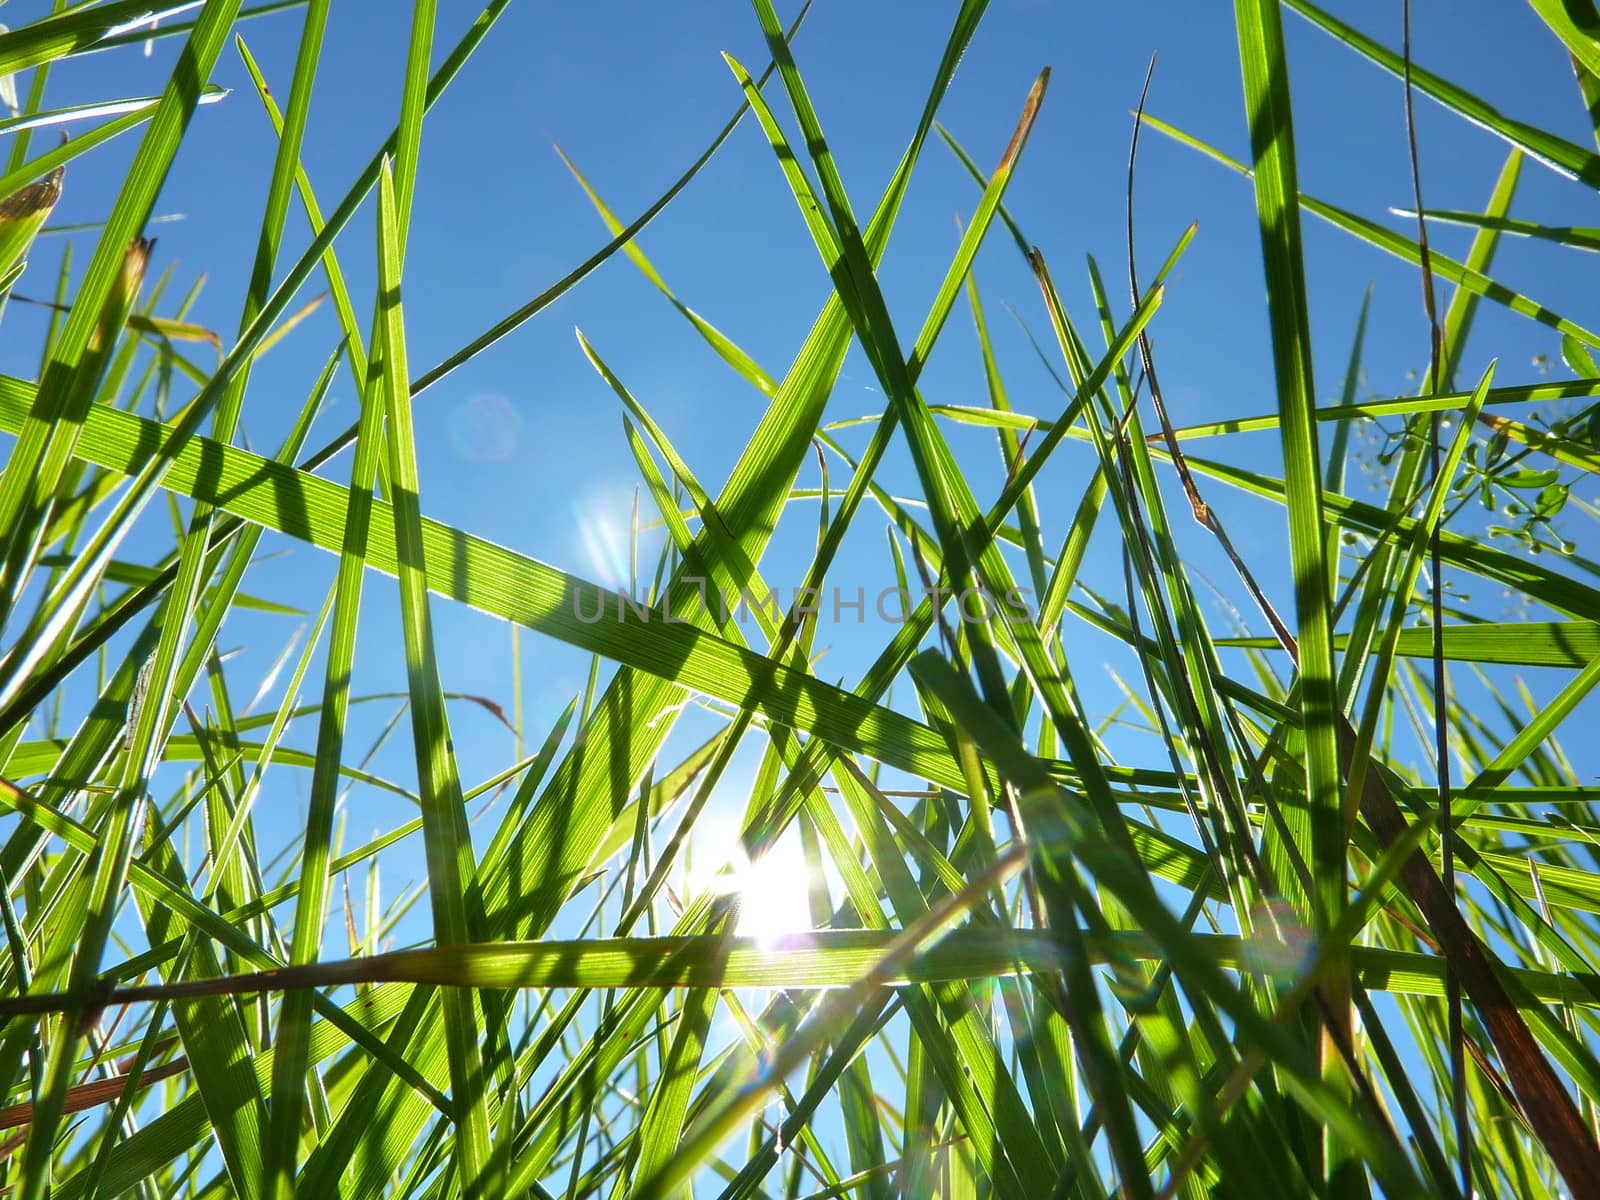 Grass blades against a blue sky by fxmdk